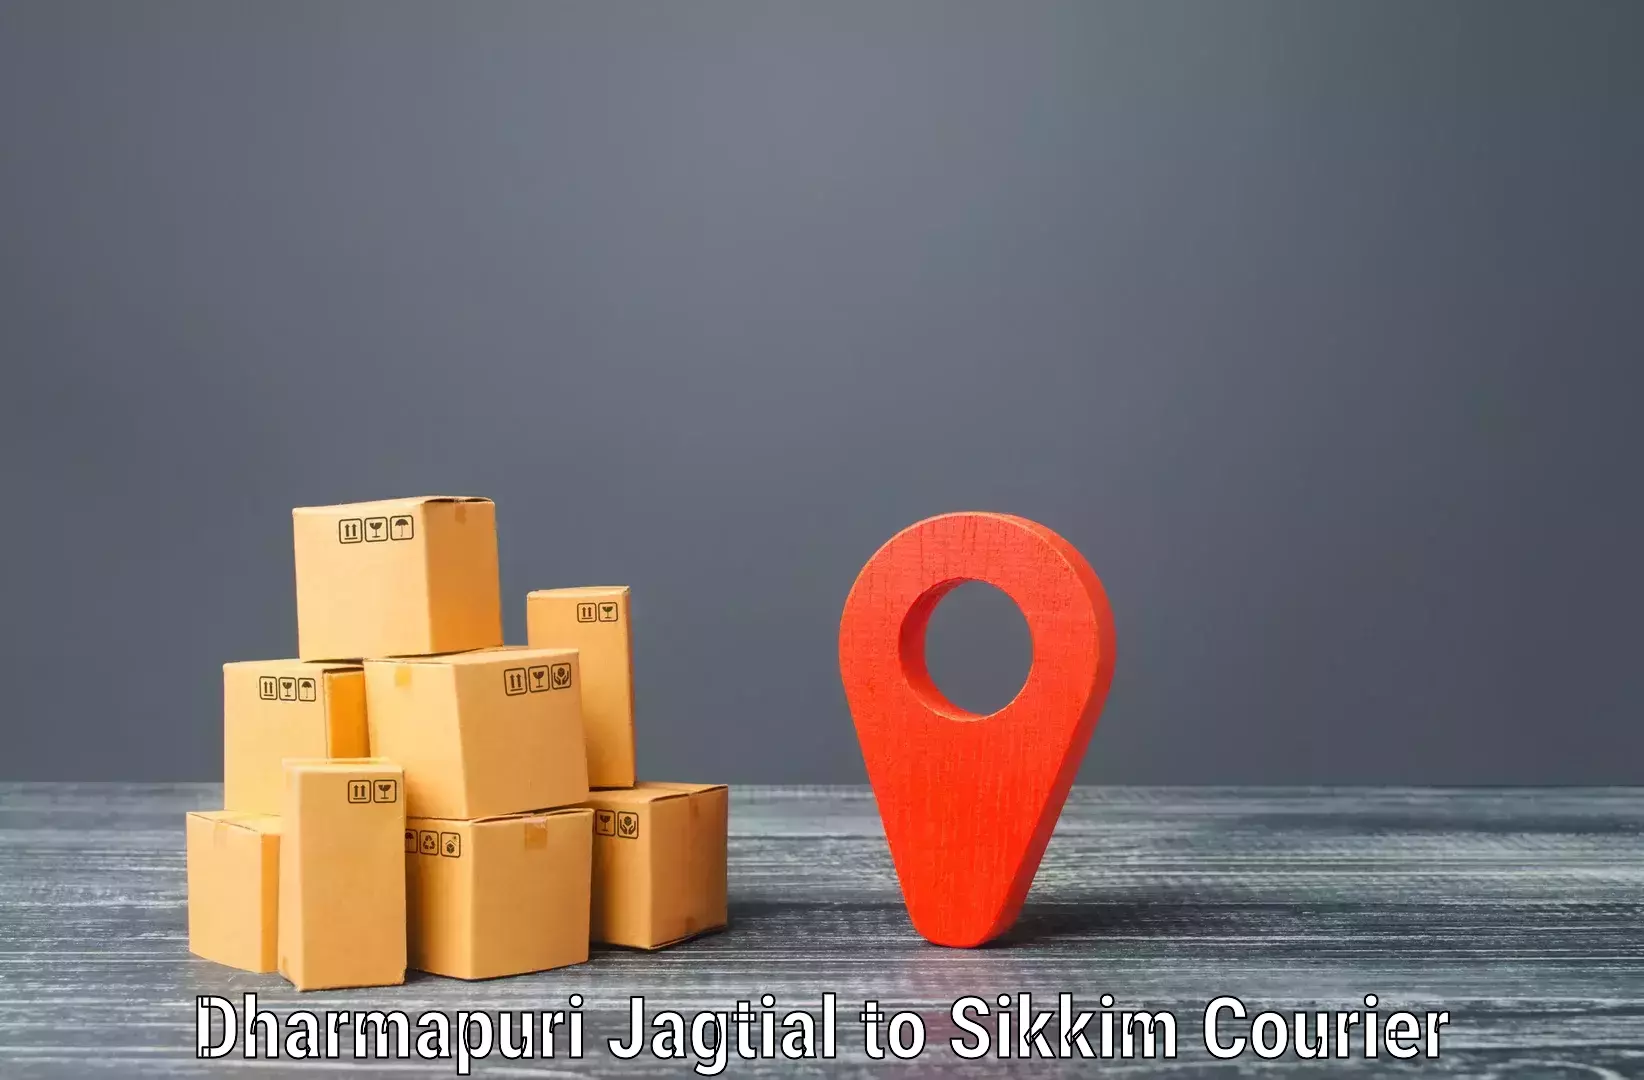 Efficient cargo handling Dharmapuri Jagtial to South Sikkim